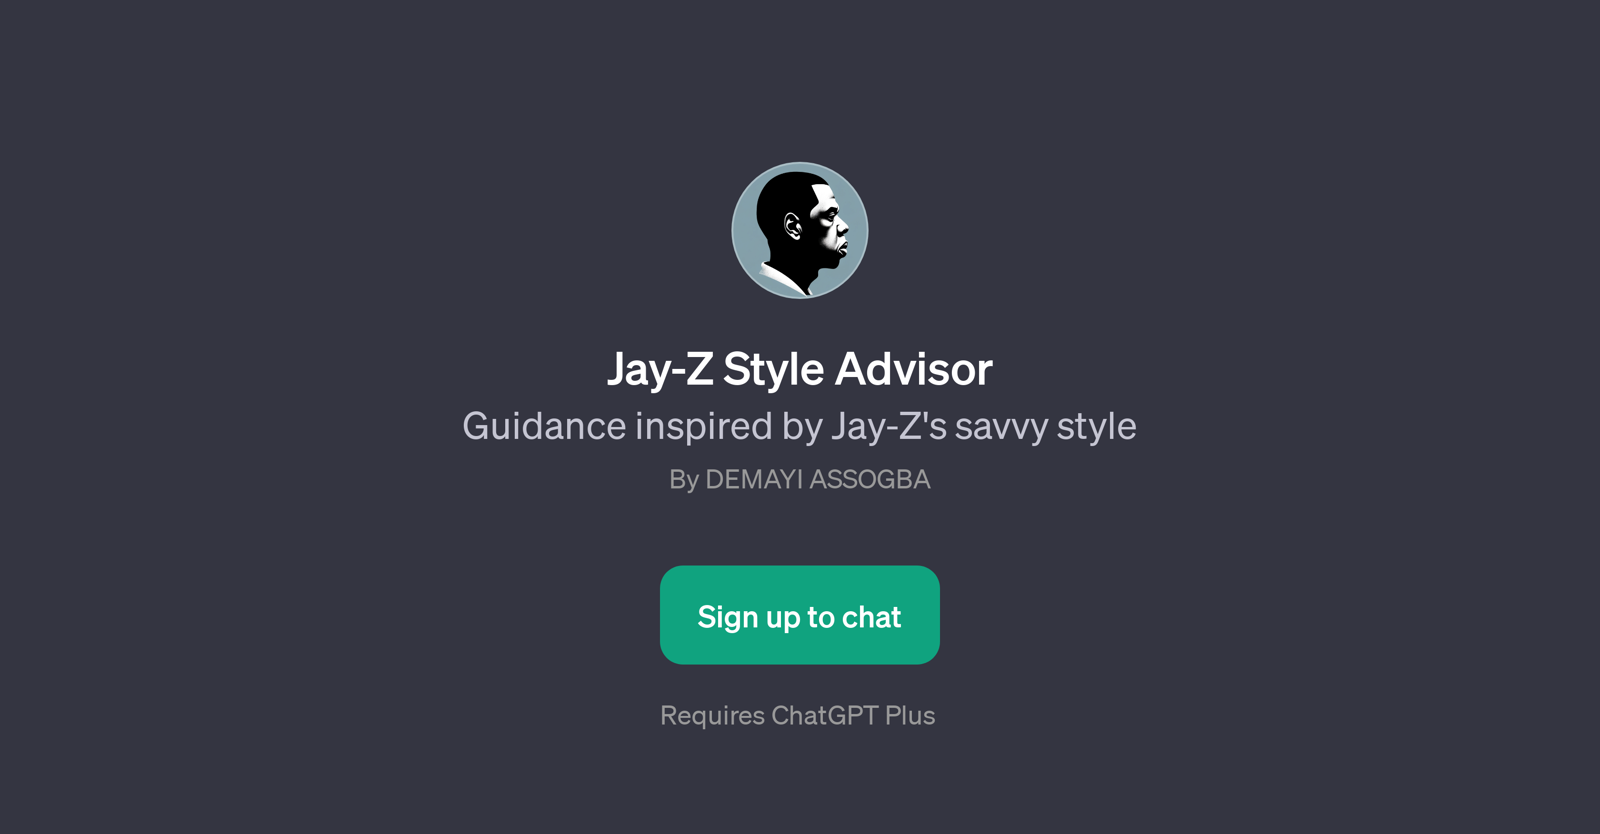 Jay-Z Style Advisor website